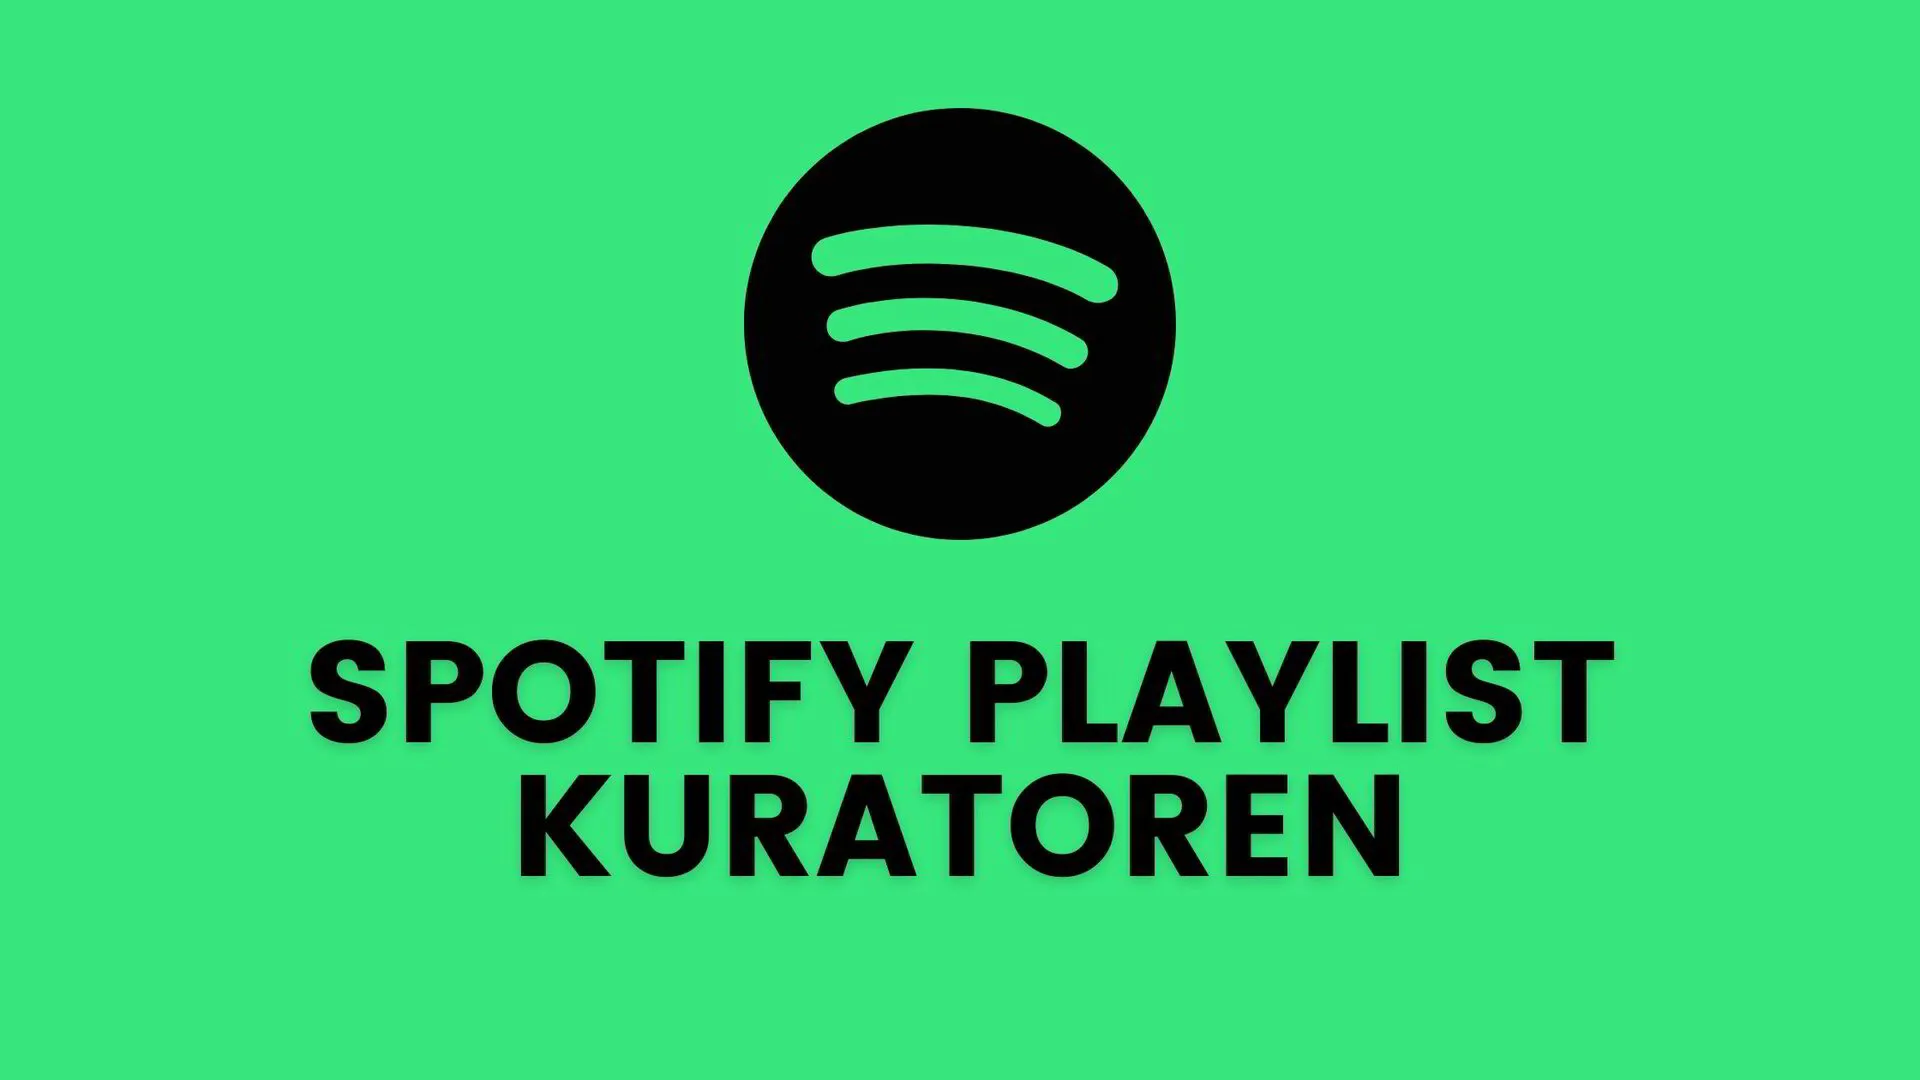 Spotify Playlist Kuratoren